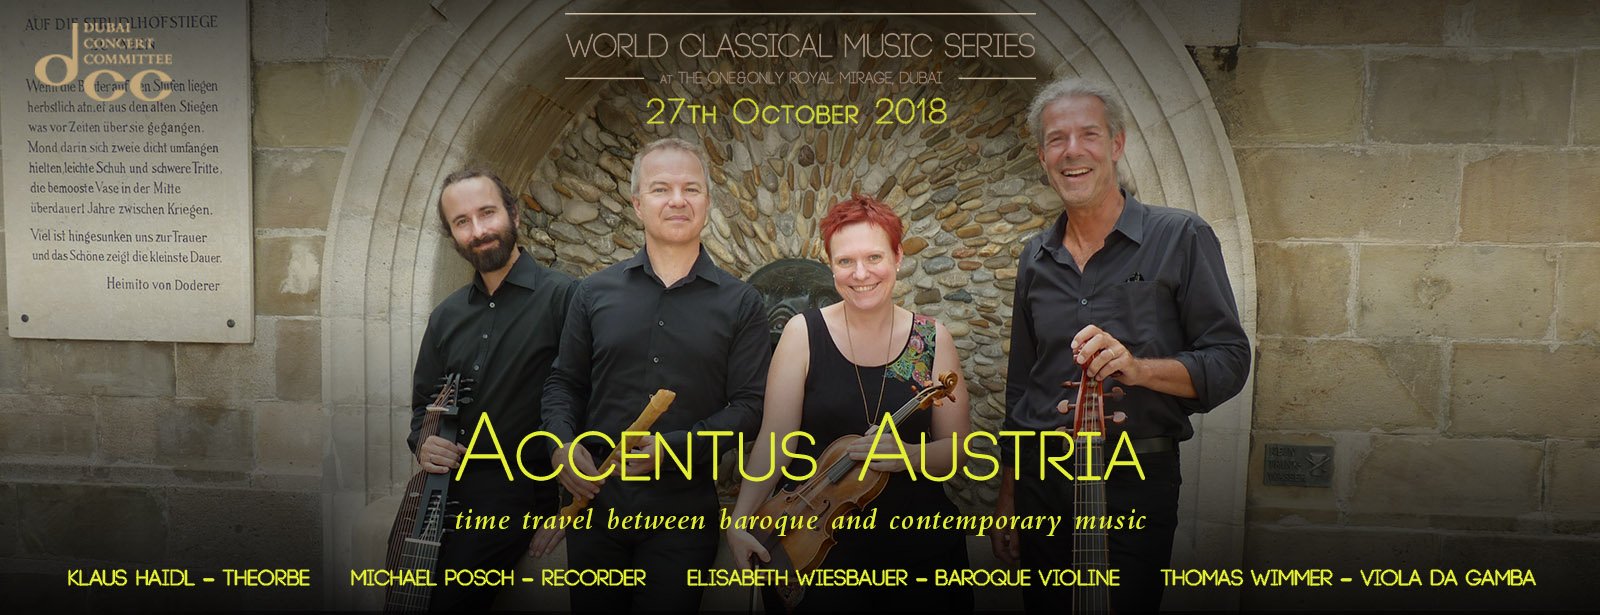 Classical music with Accentus Austria - Coming Soon in UAE